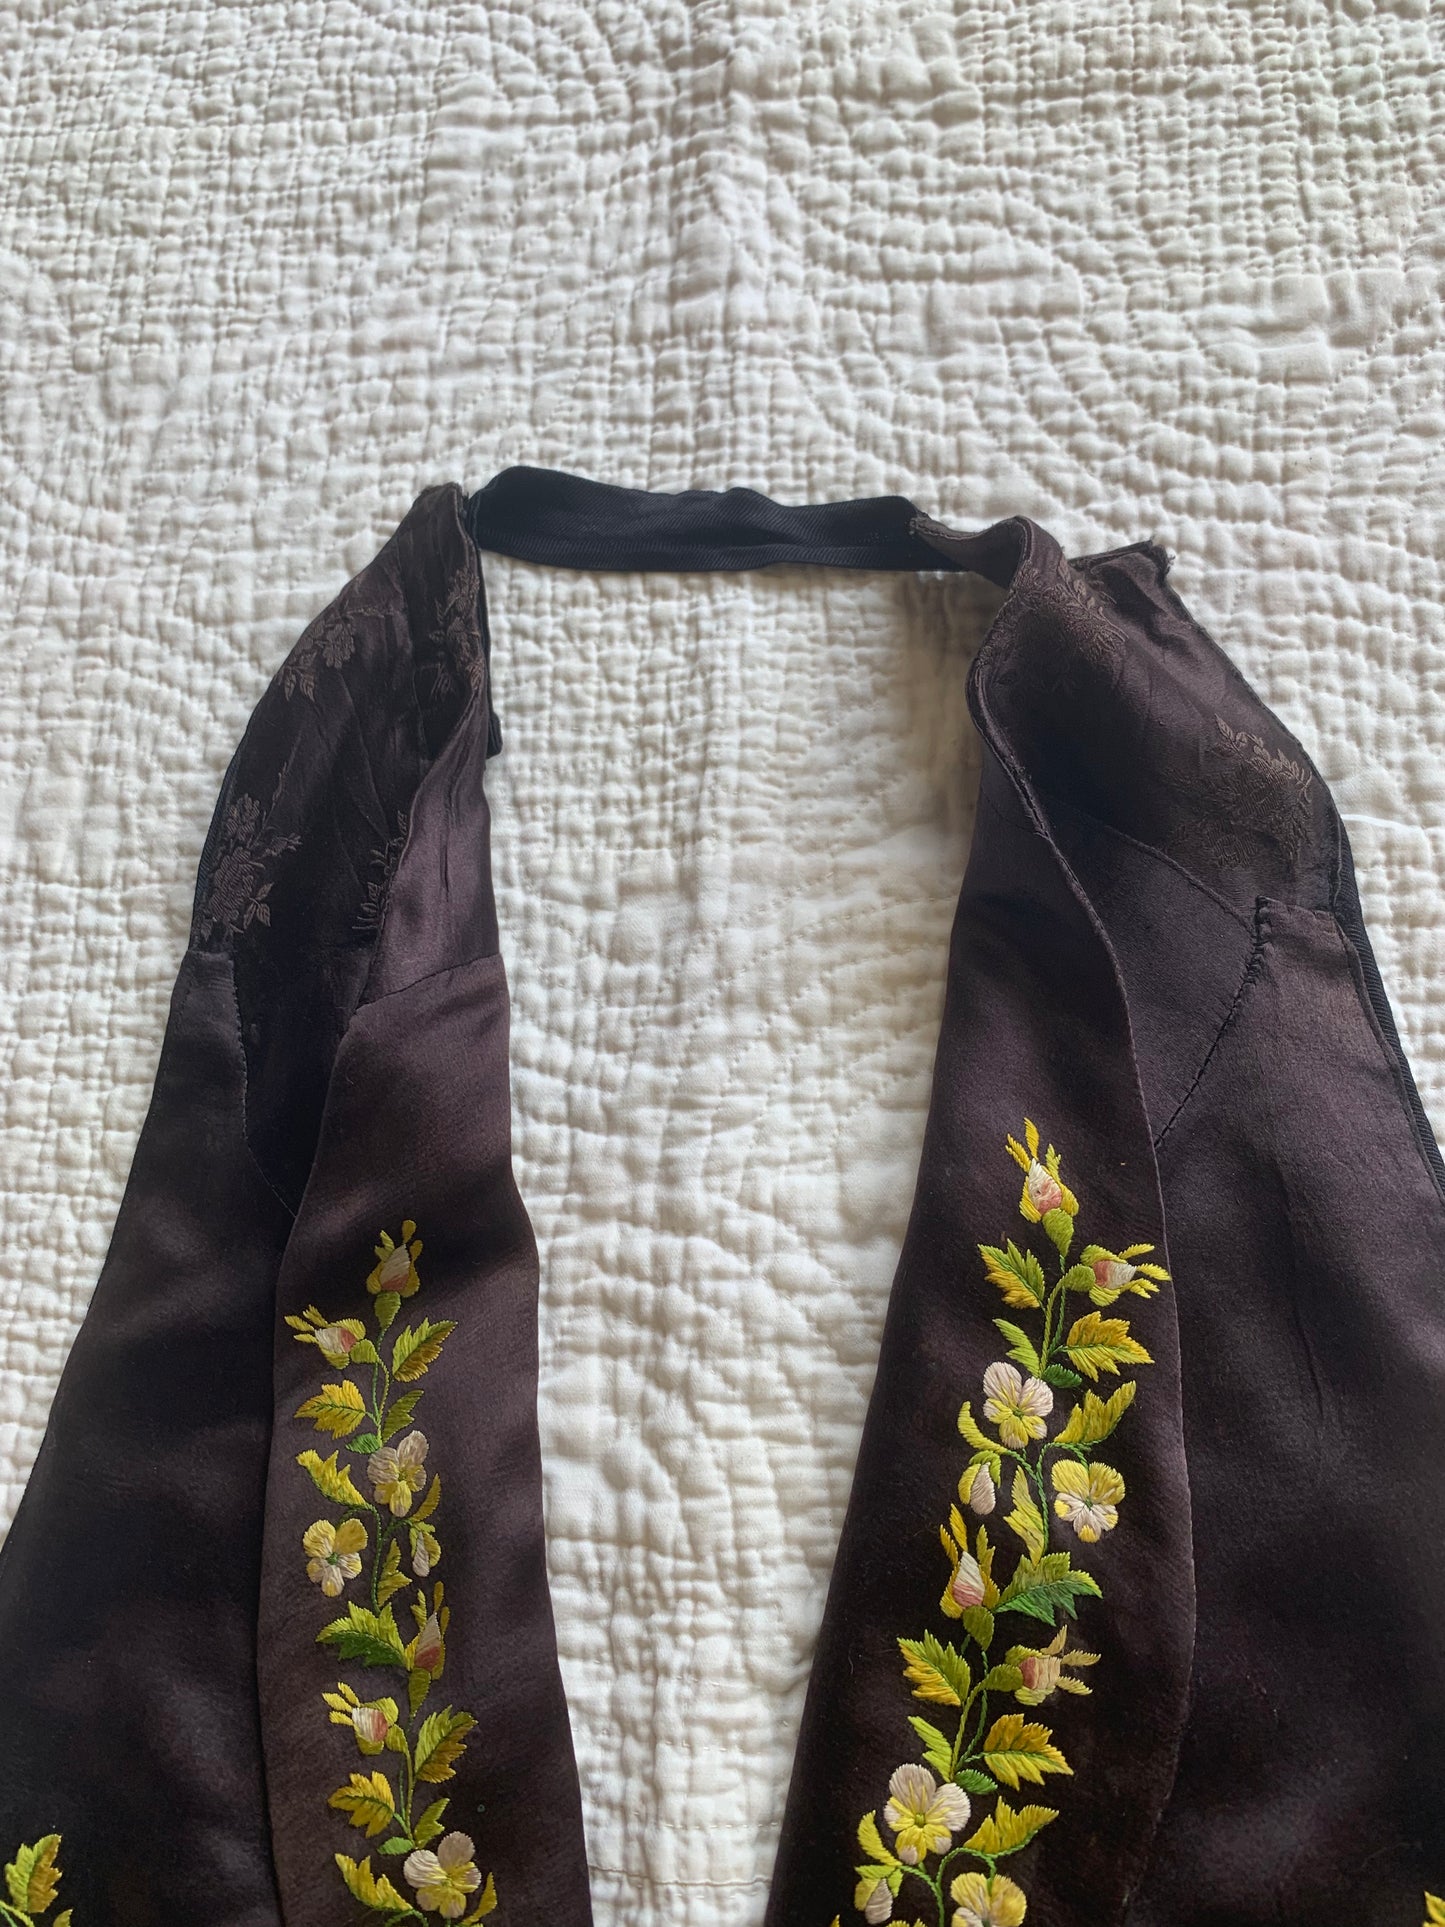 Antique Embroidered Silk Vest